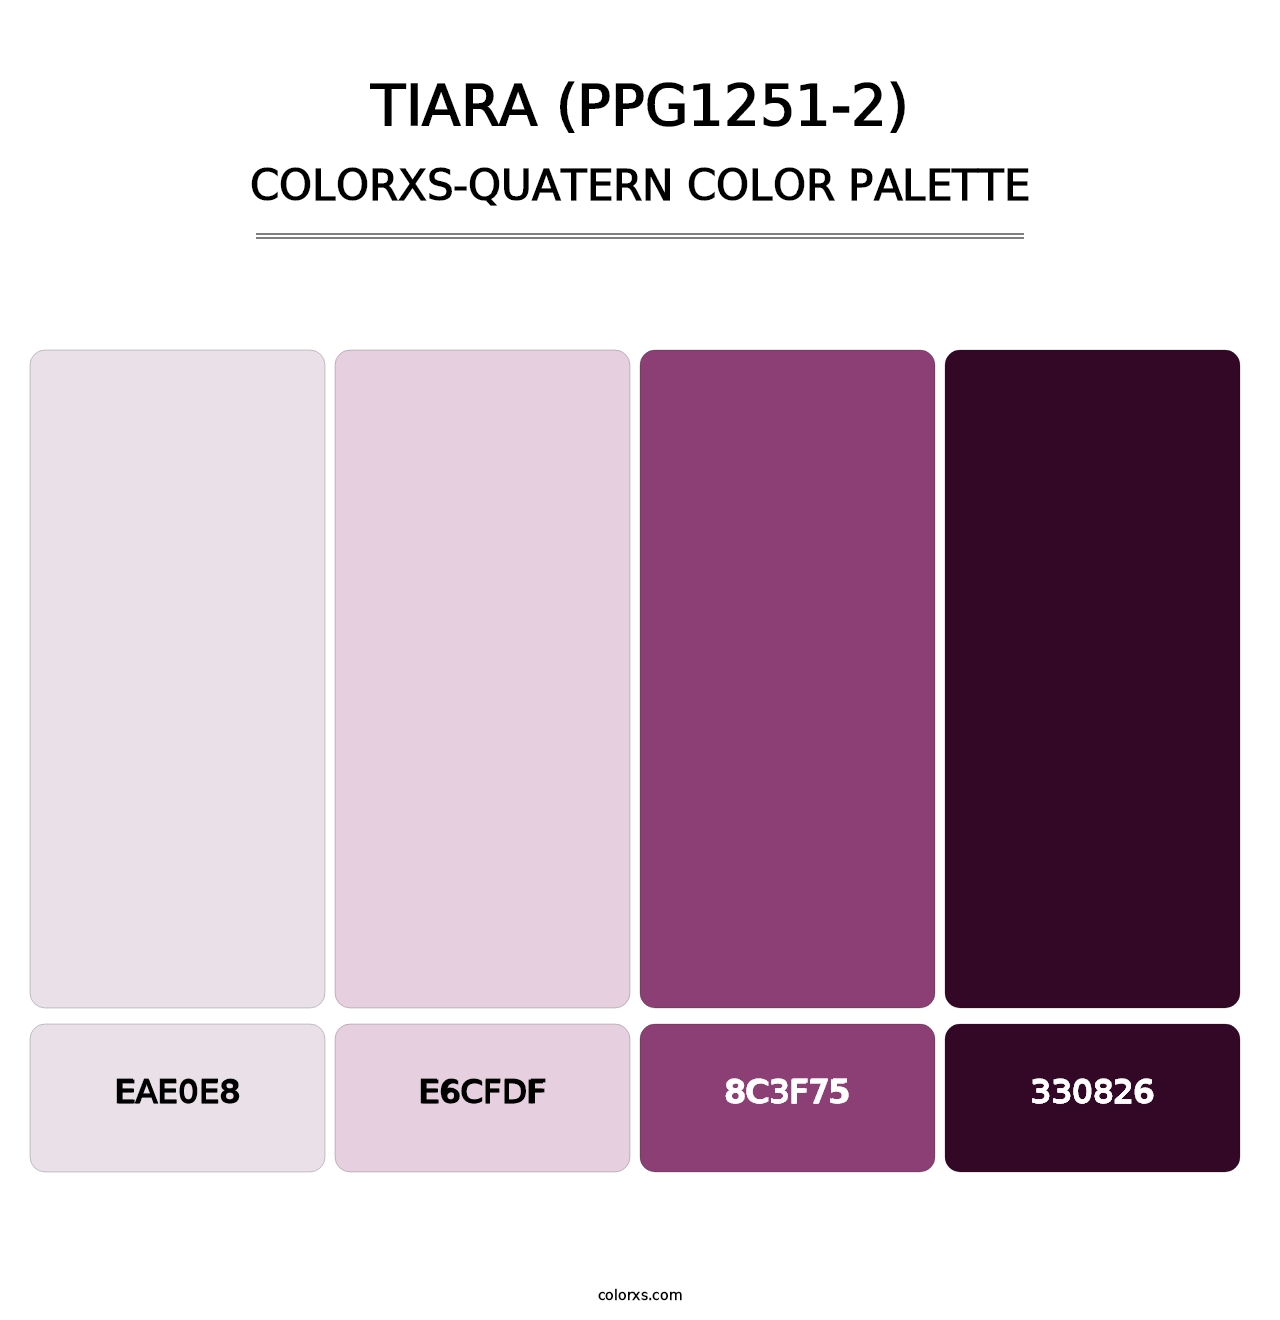 Tiara (PPG1251-2) - Colorxs Quatern Palette